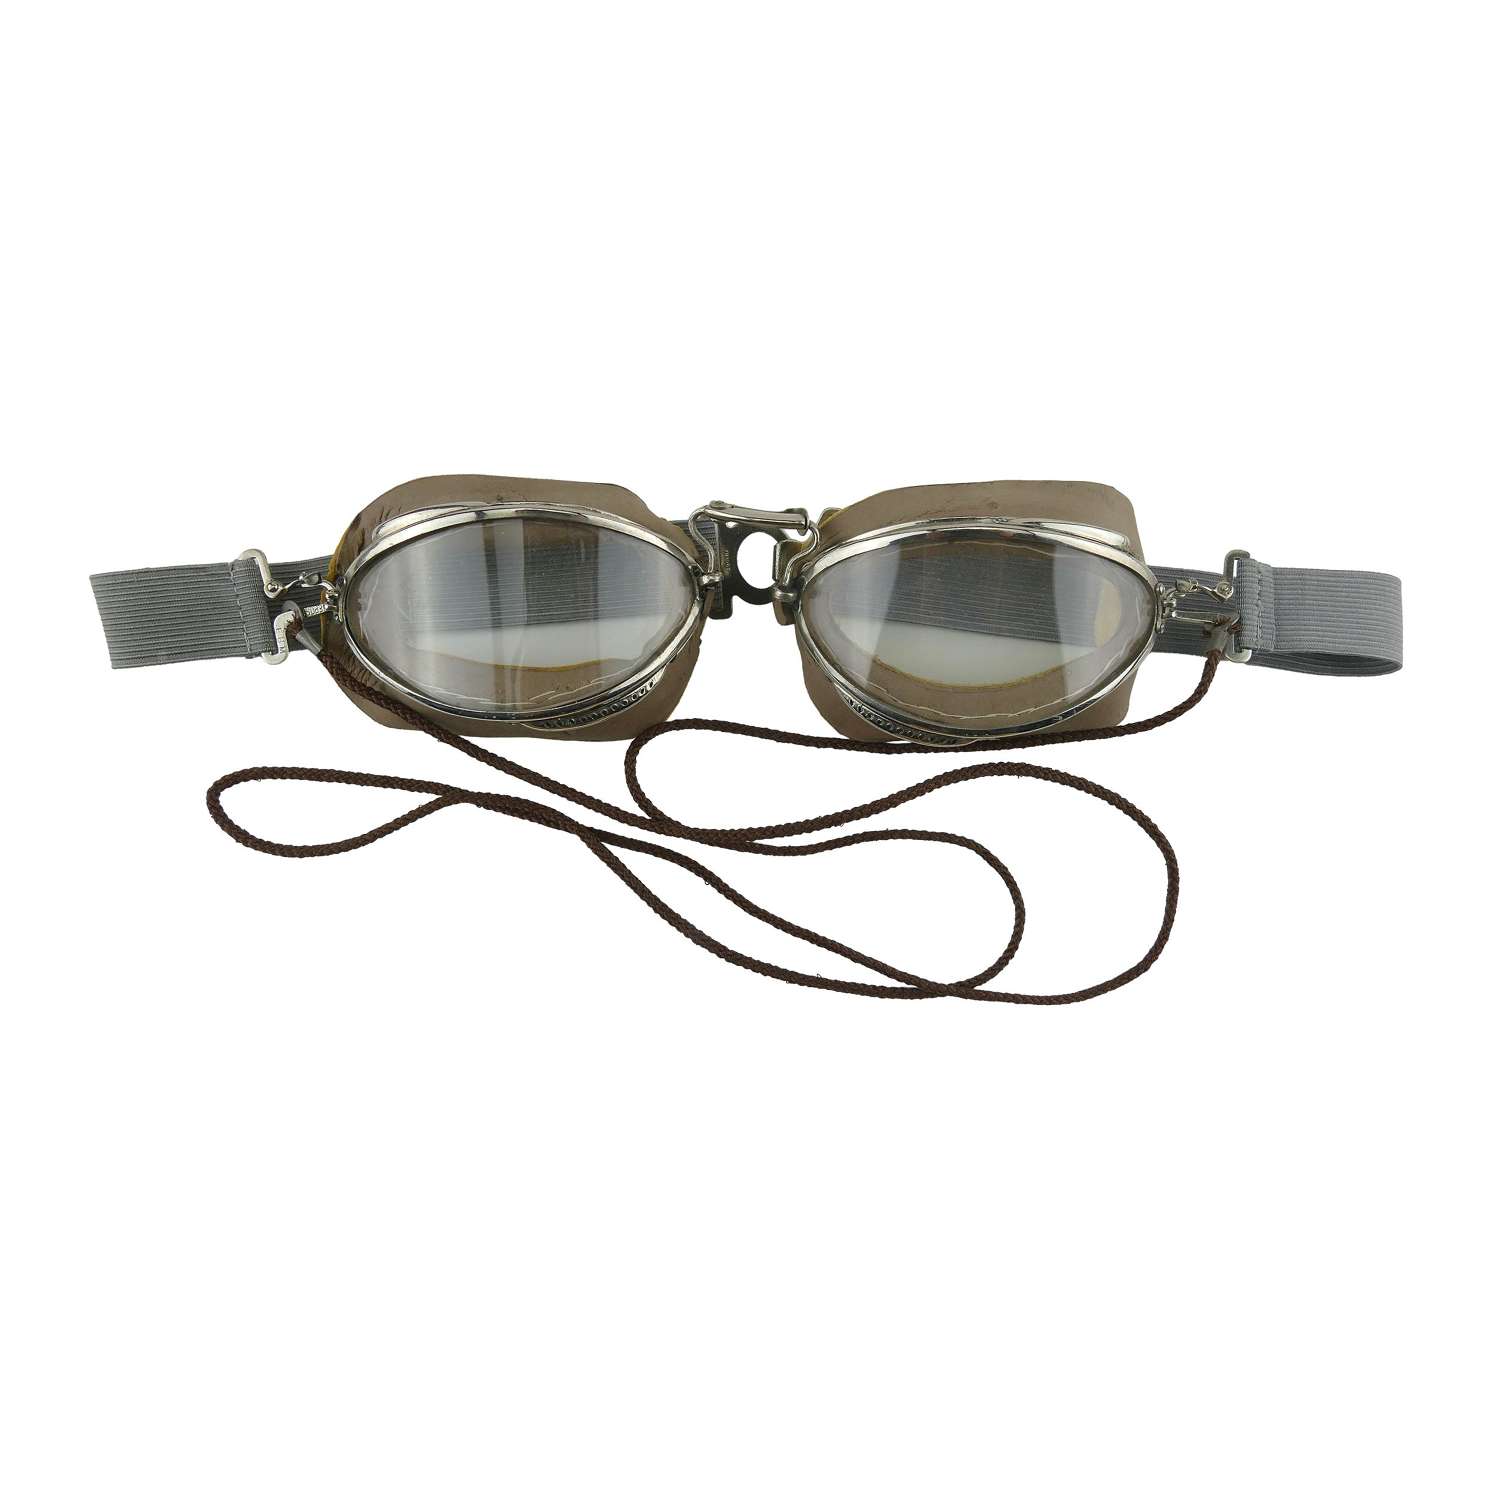 USAC / French Meyrowitz No.3 flying goggles